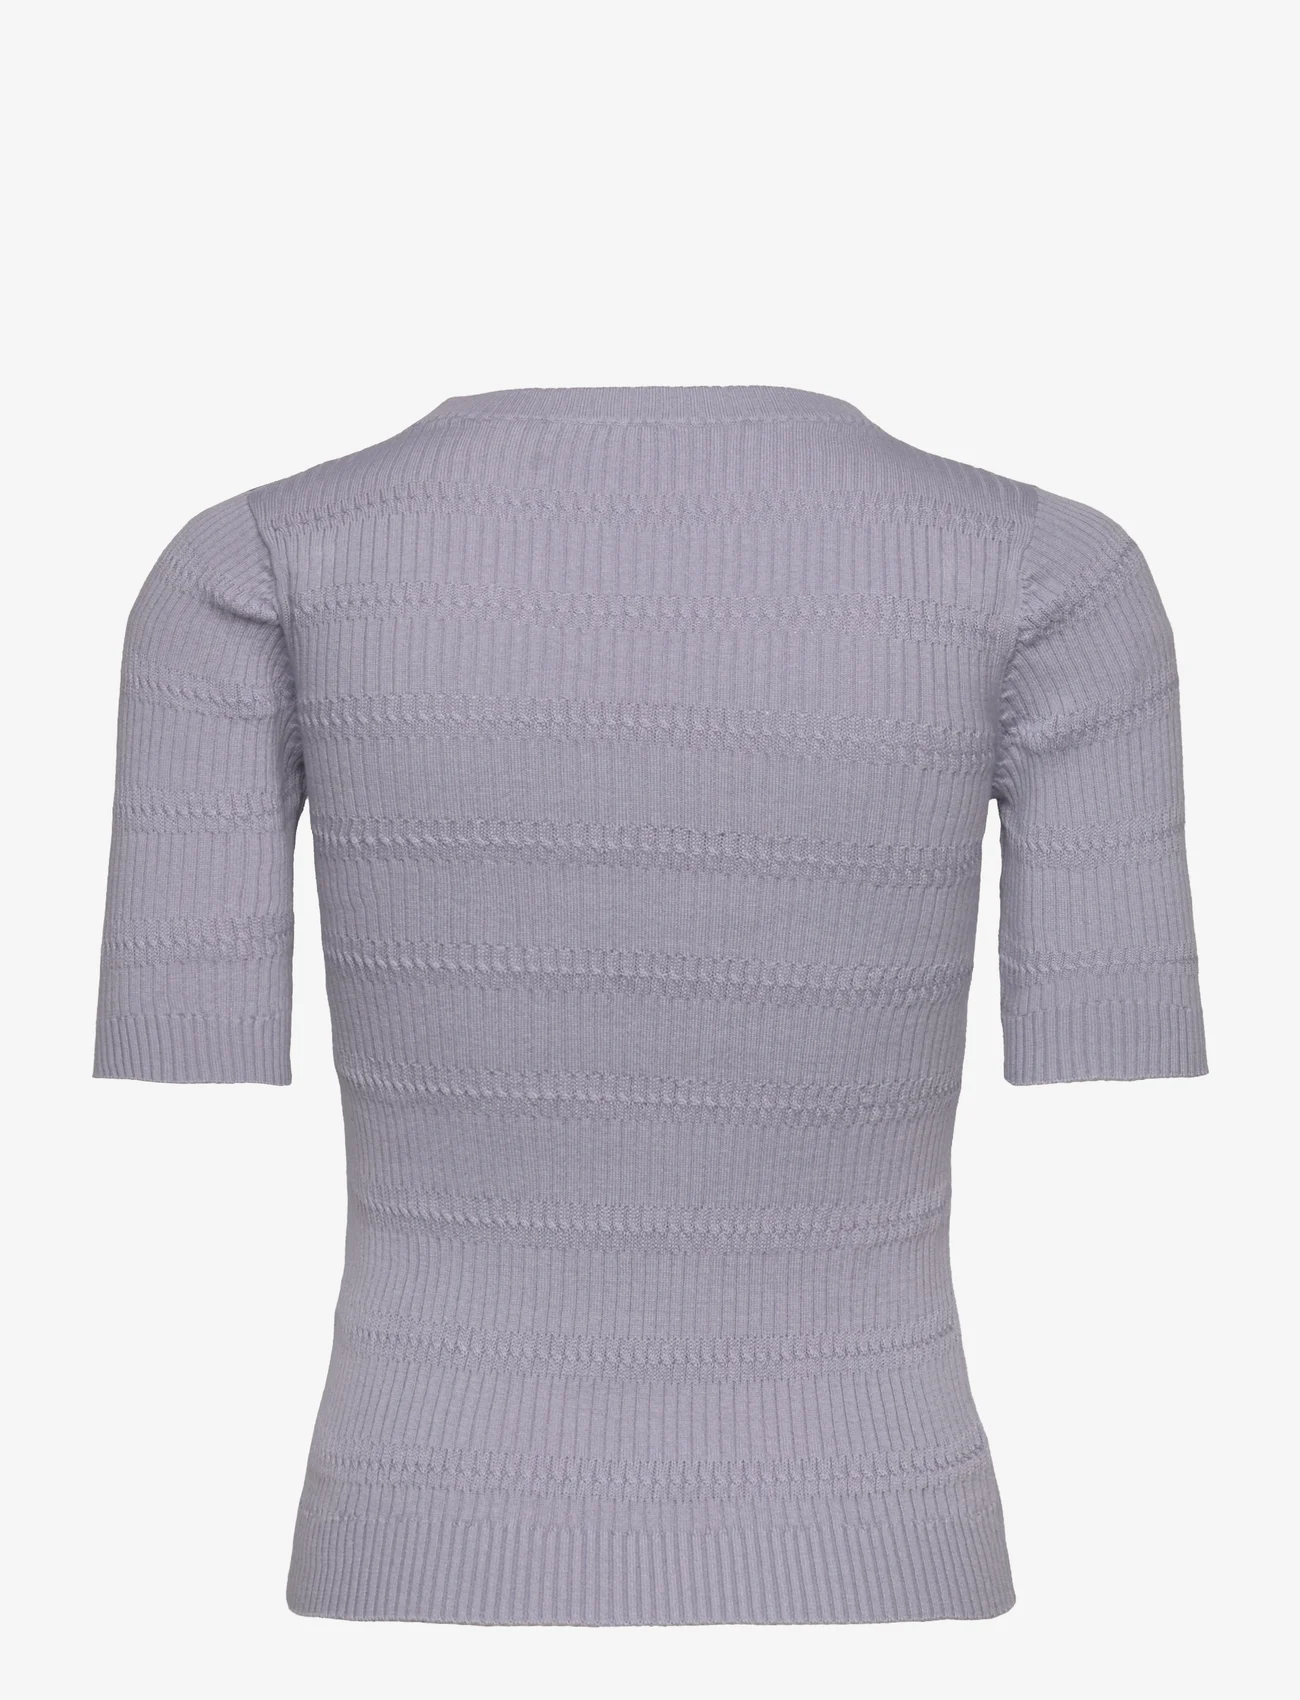 Esprit Casual - Sweaters - pullover - light blue lavender - 1